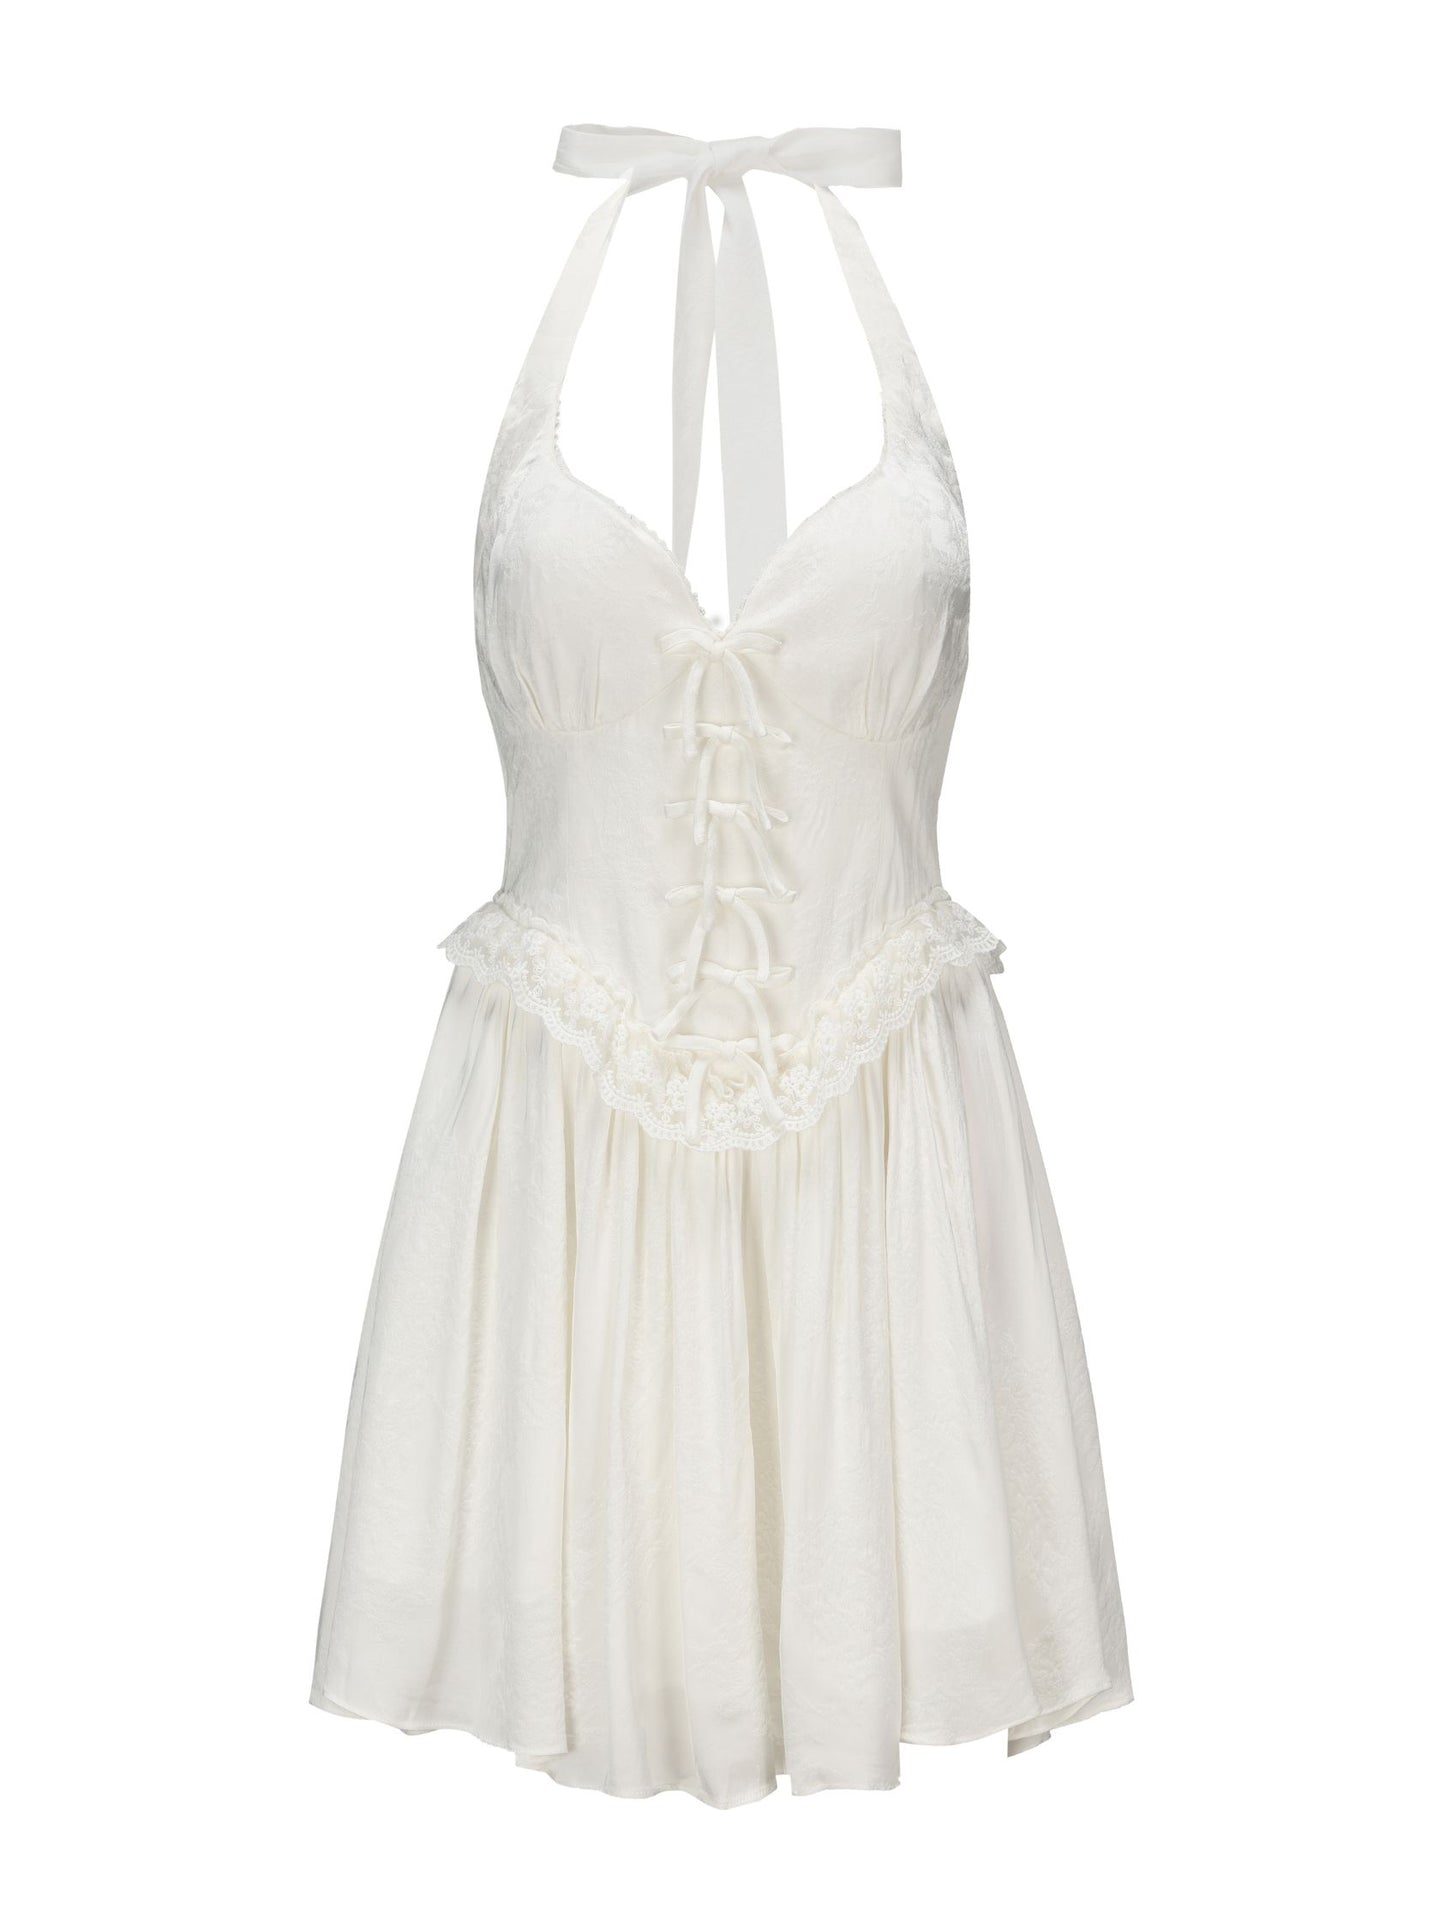 Allie Dress (White)